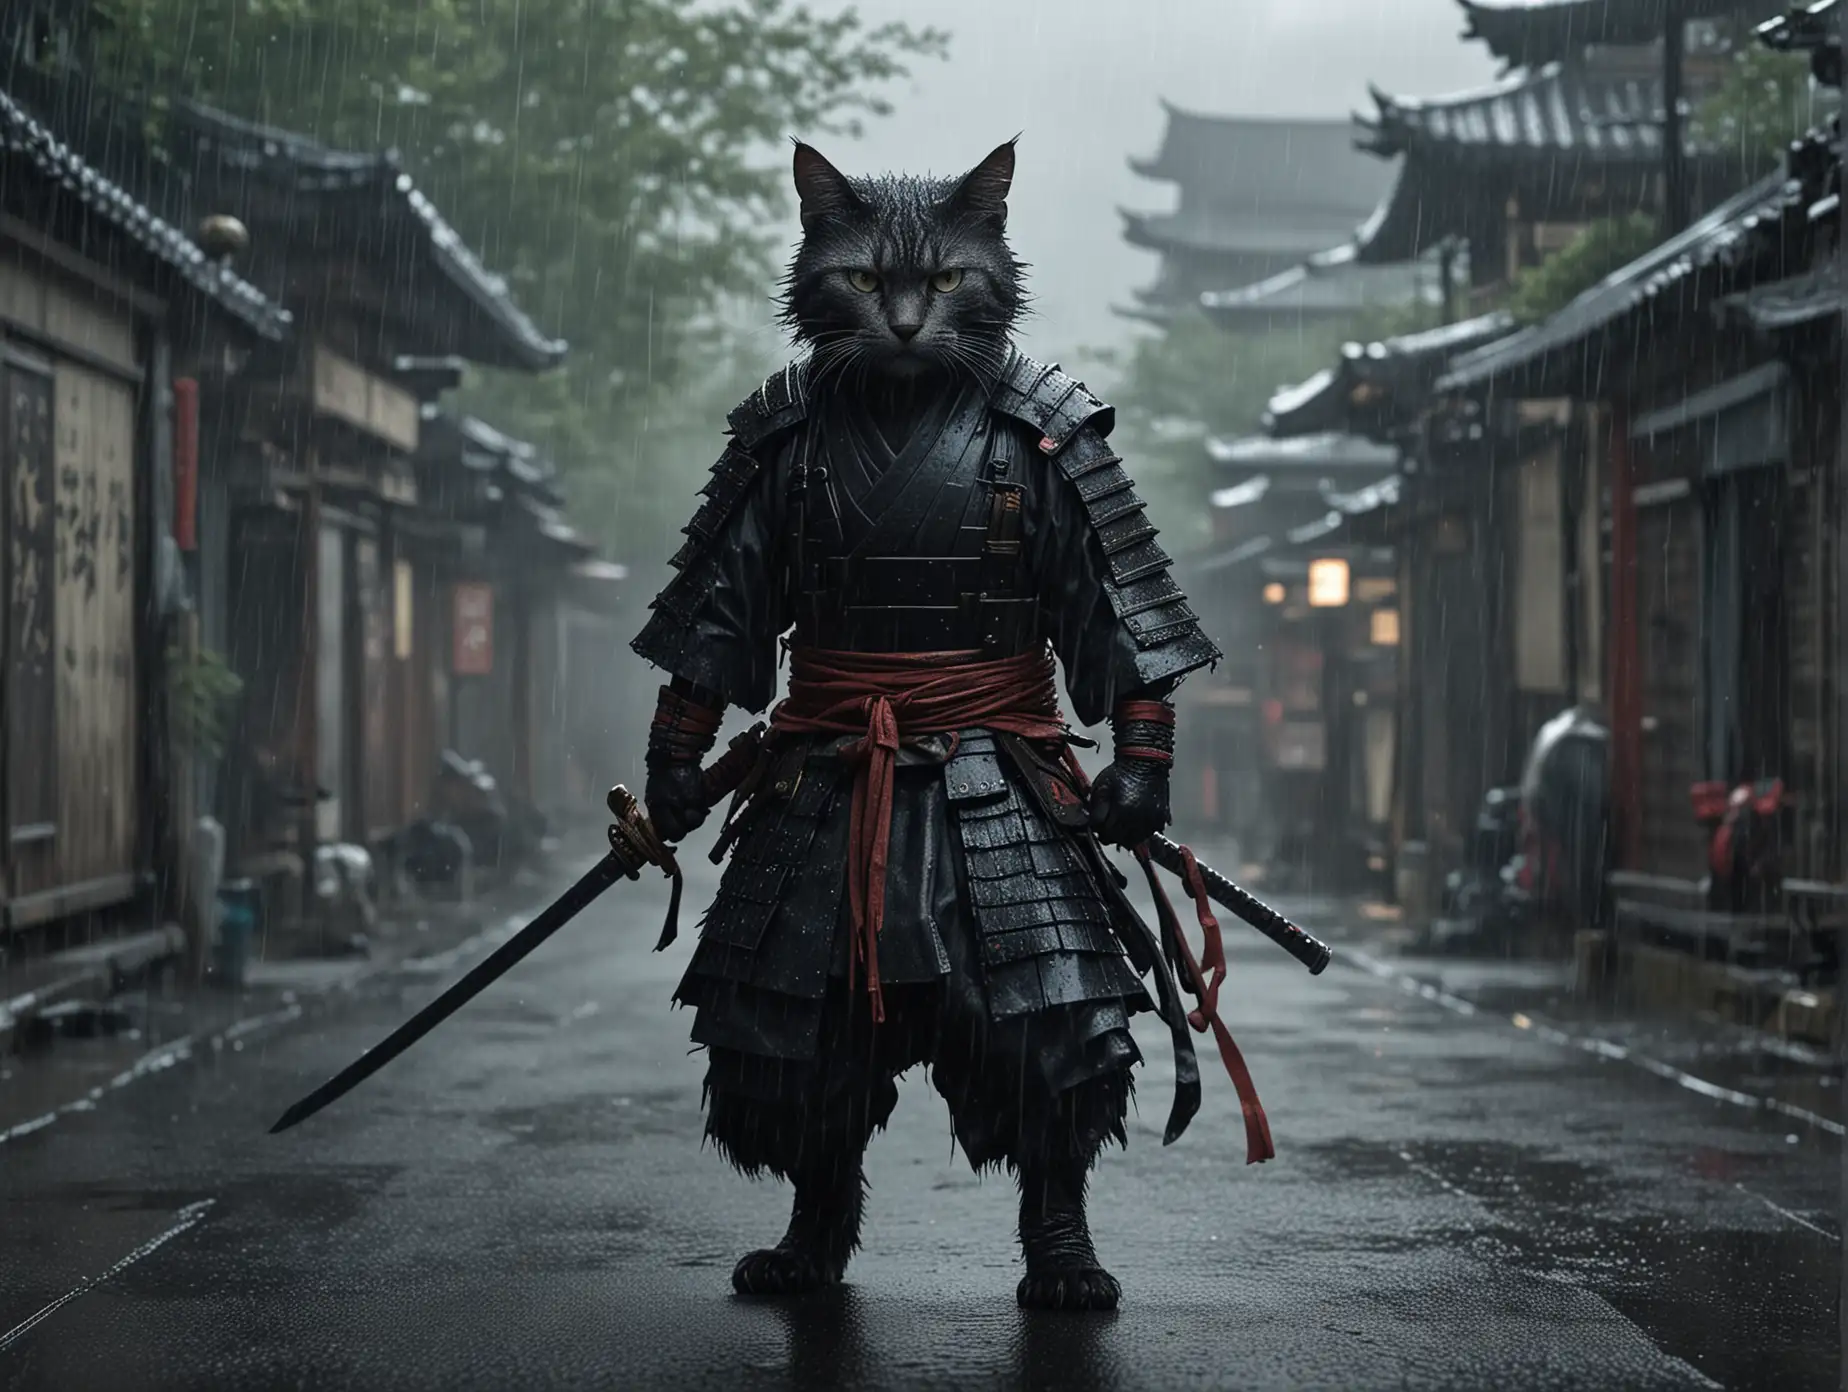 SamuraiInspired Feline Warrior in a Gritty RainSoaked Cityscape